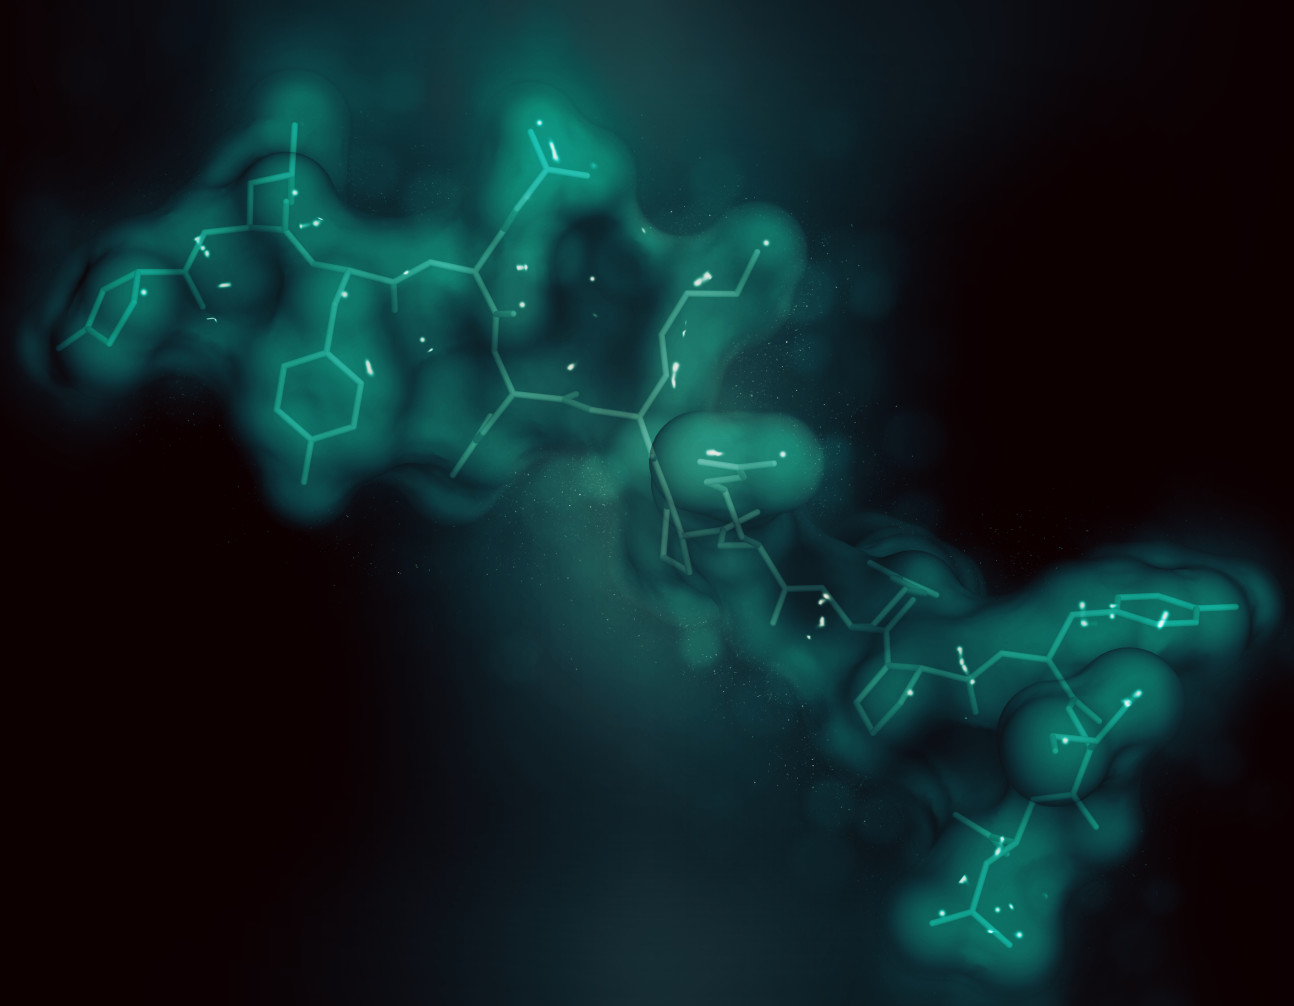 An illustration of a molecule